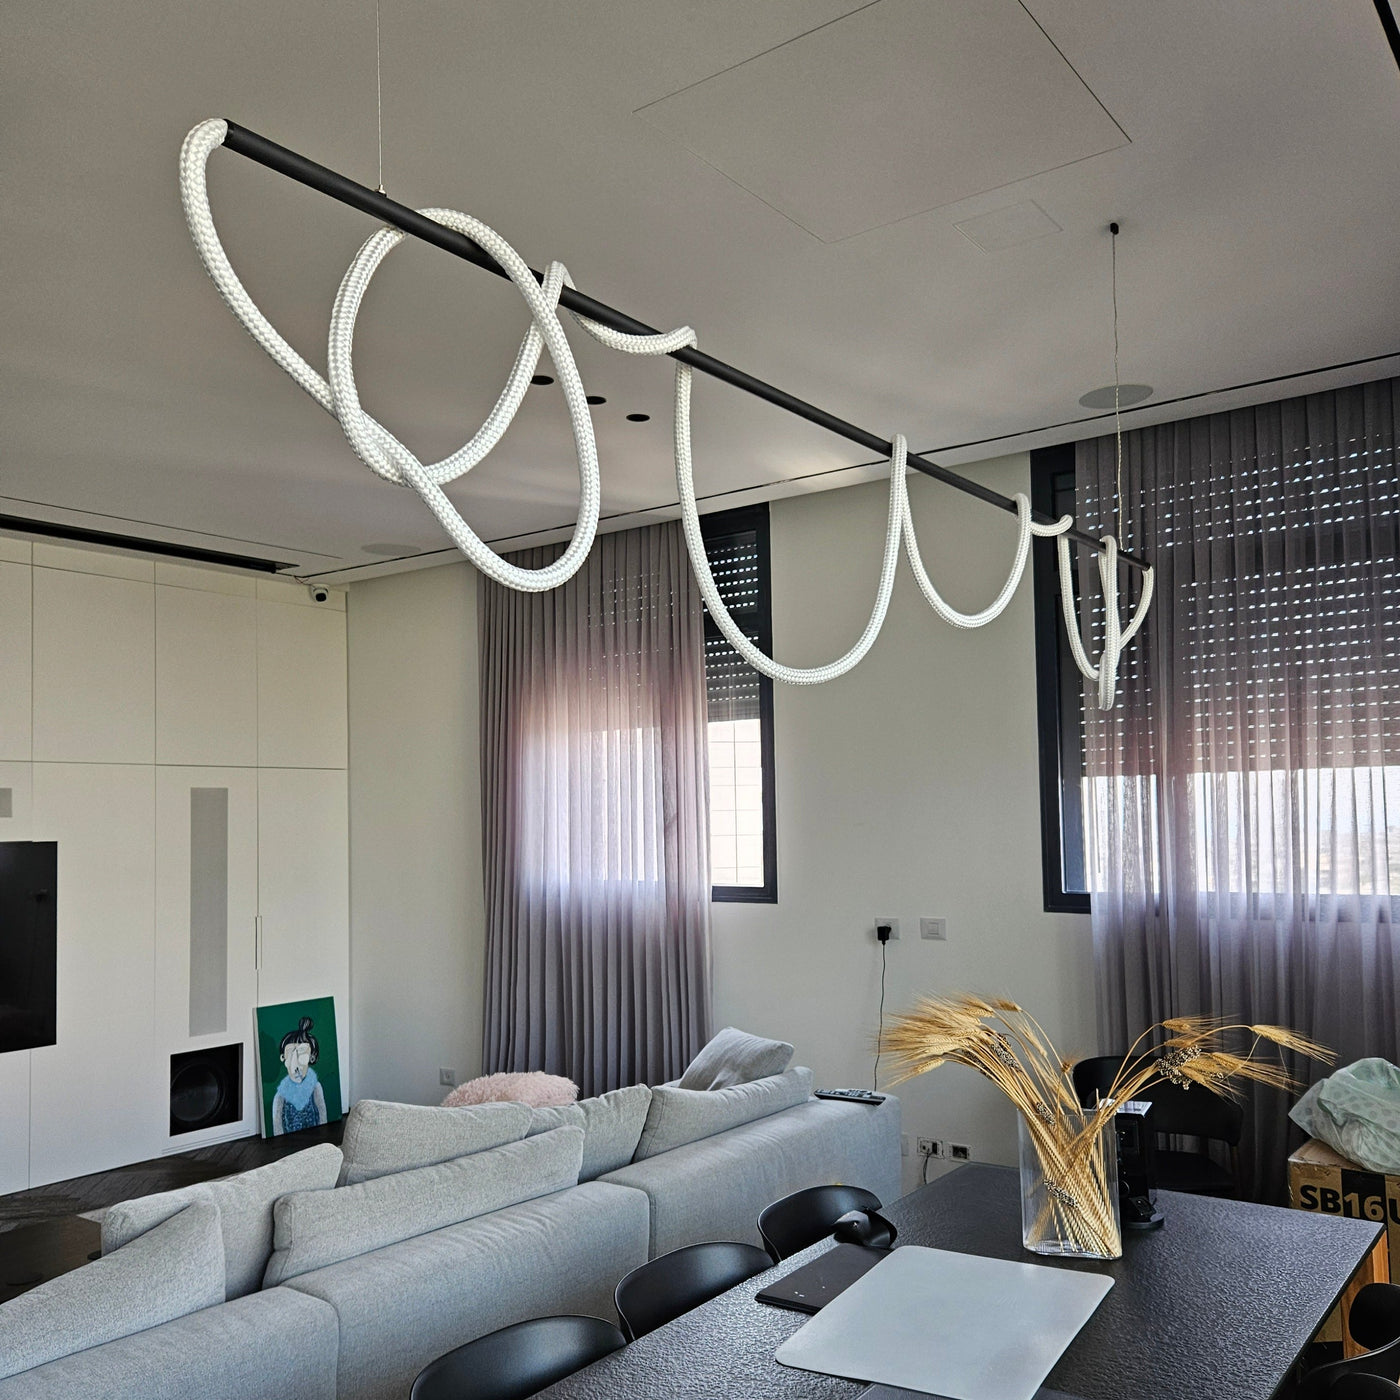 Hanging Around -  Extra Wide Rope Lamp